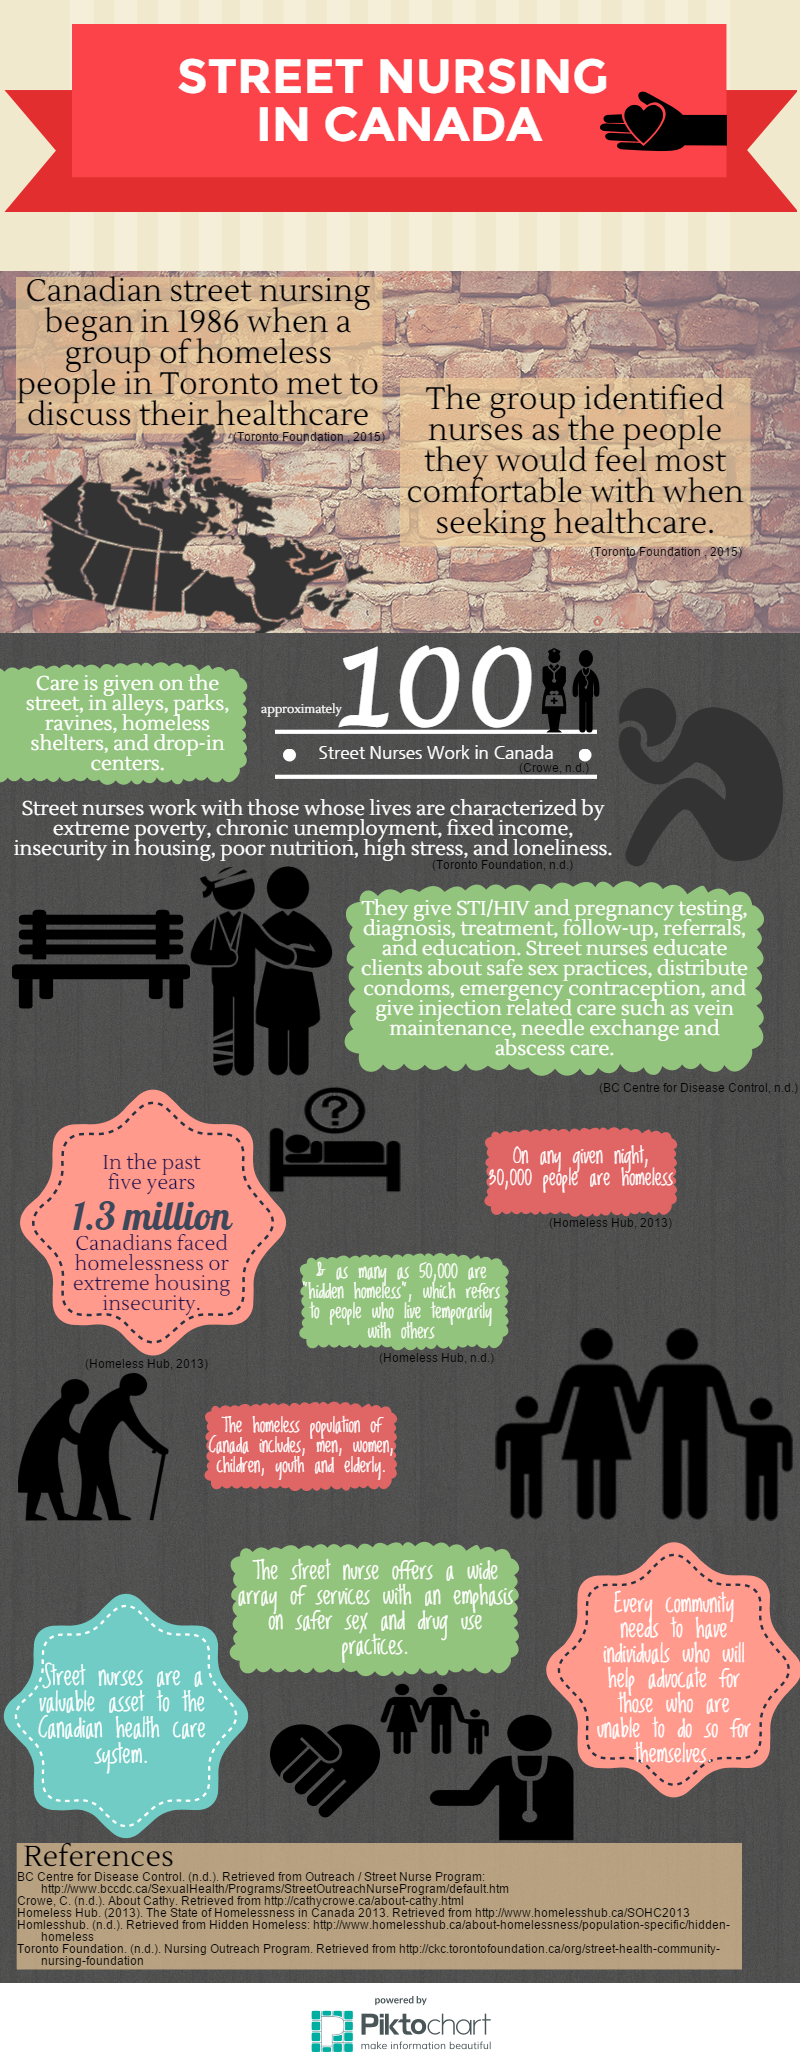 Street nursing in Canada infographic